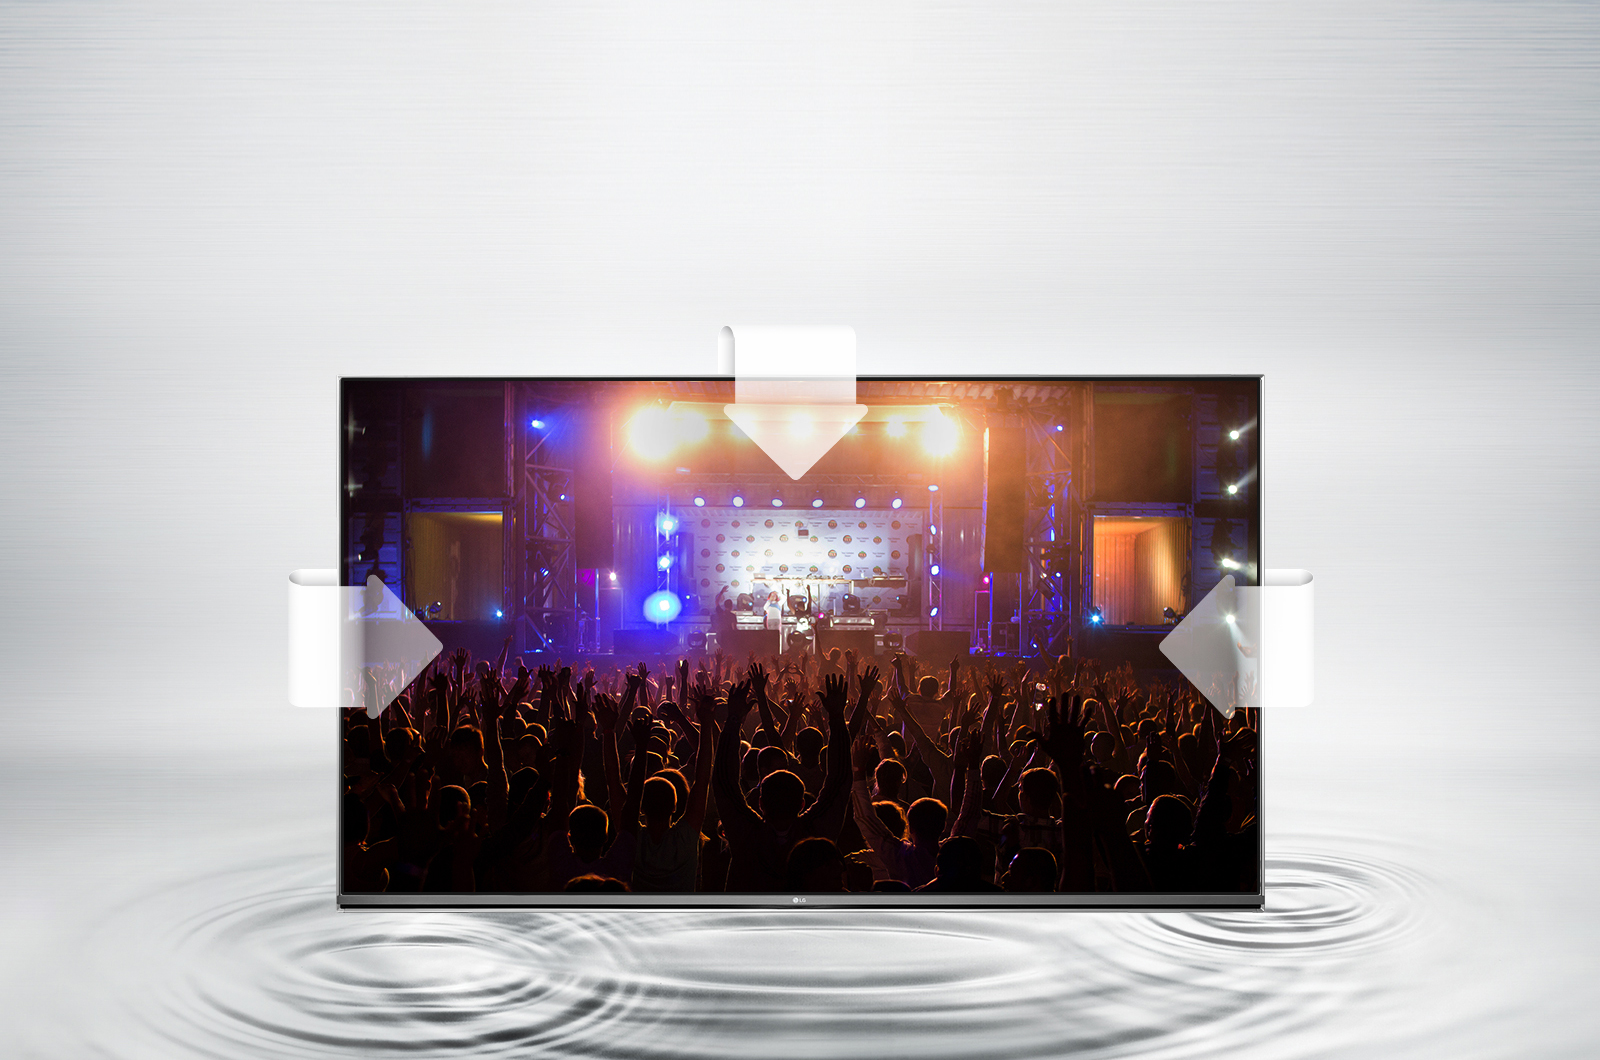 تلویزیون 4K هوشمند ال جی LED TV 4K Smart LG 49UH61700GI - سایز 49 اینچ